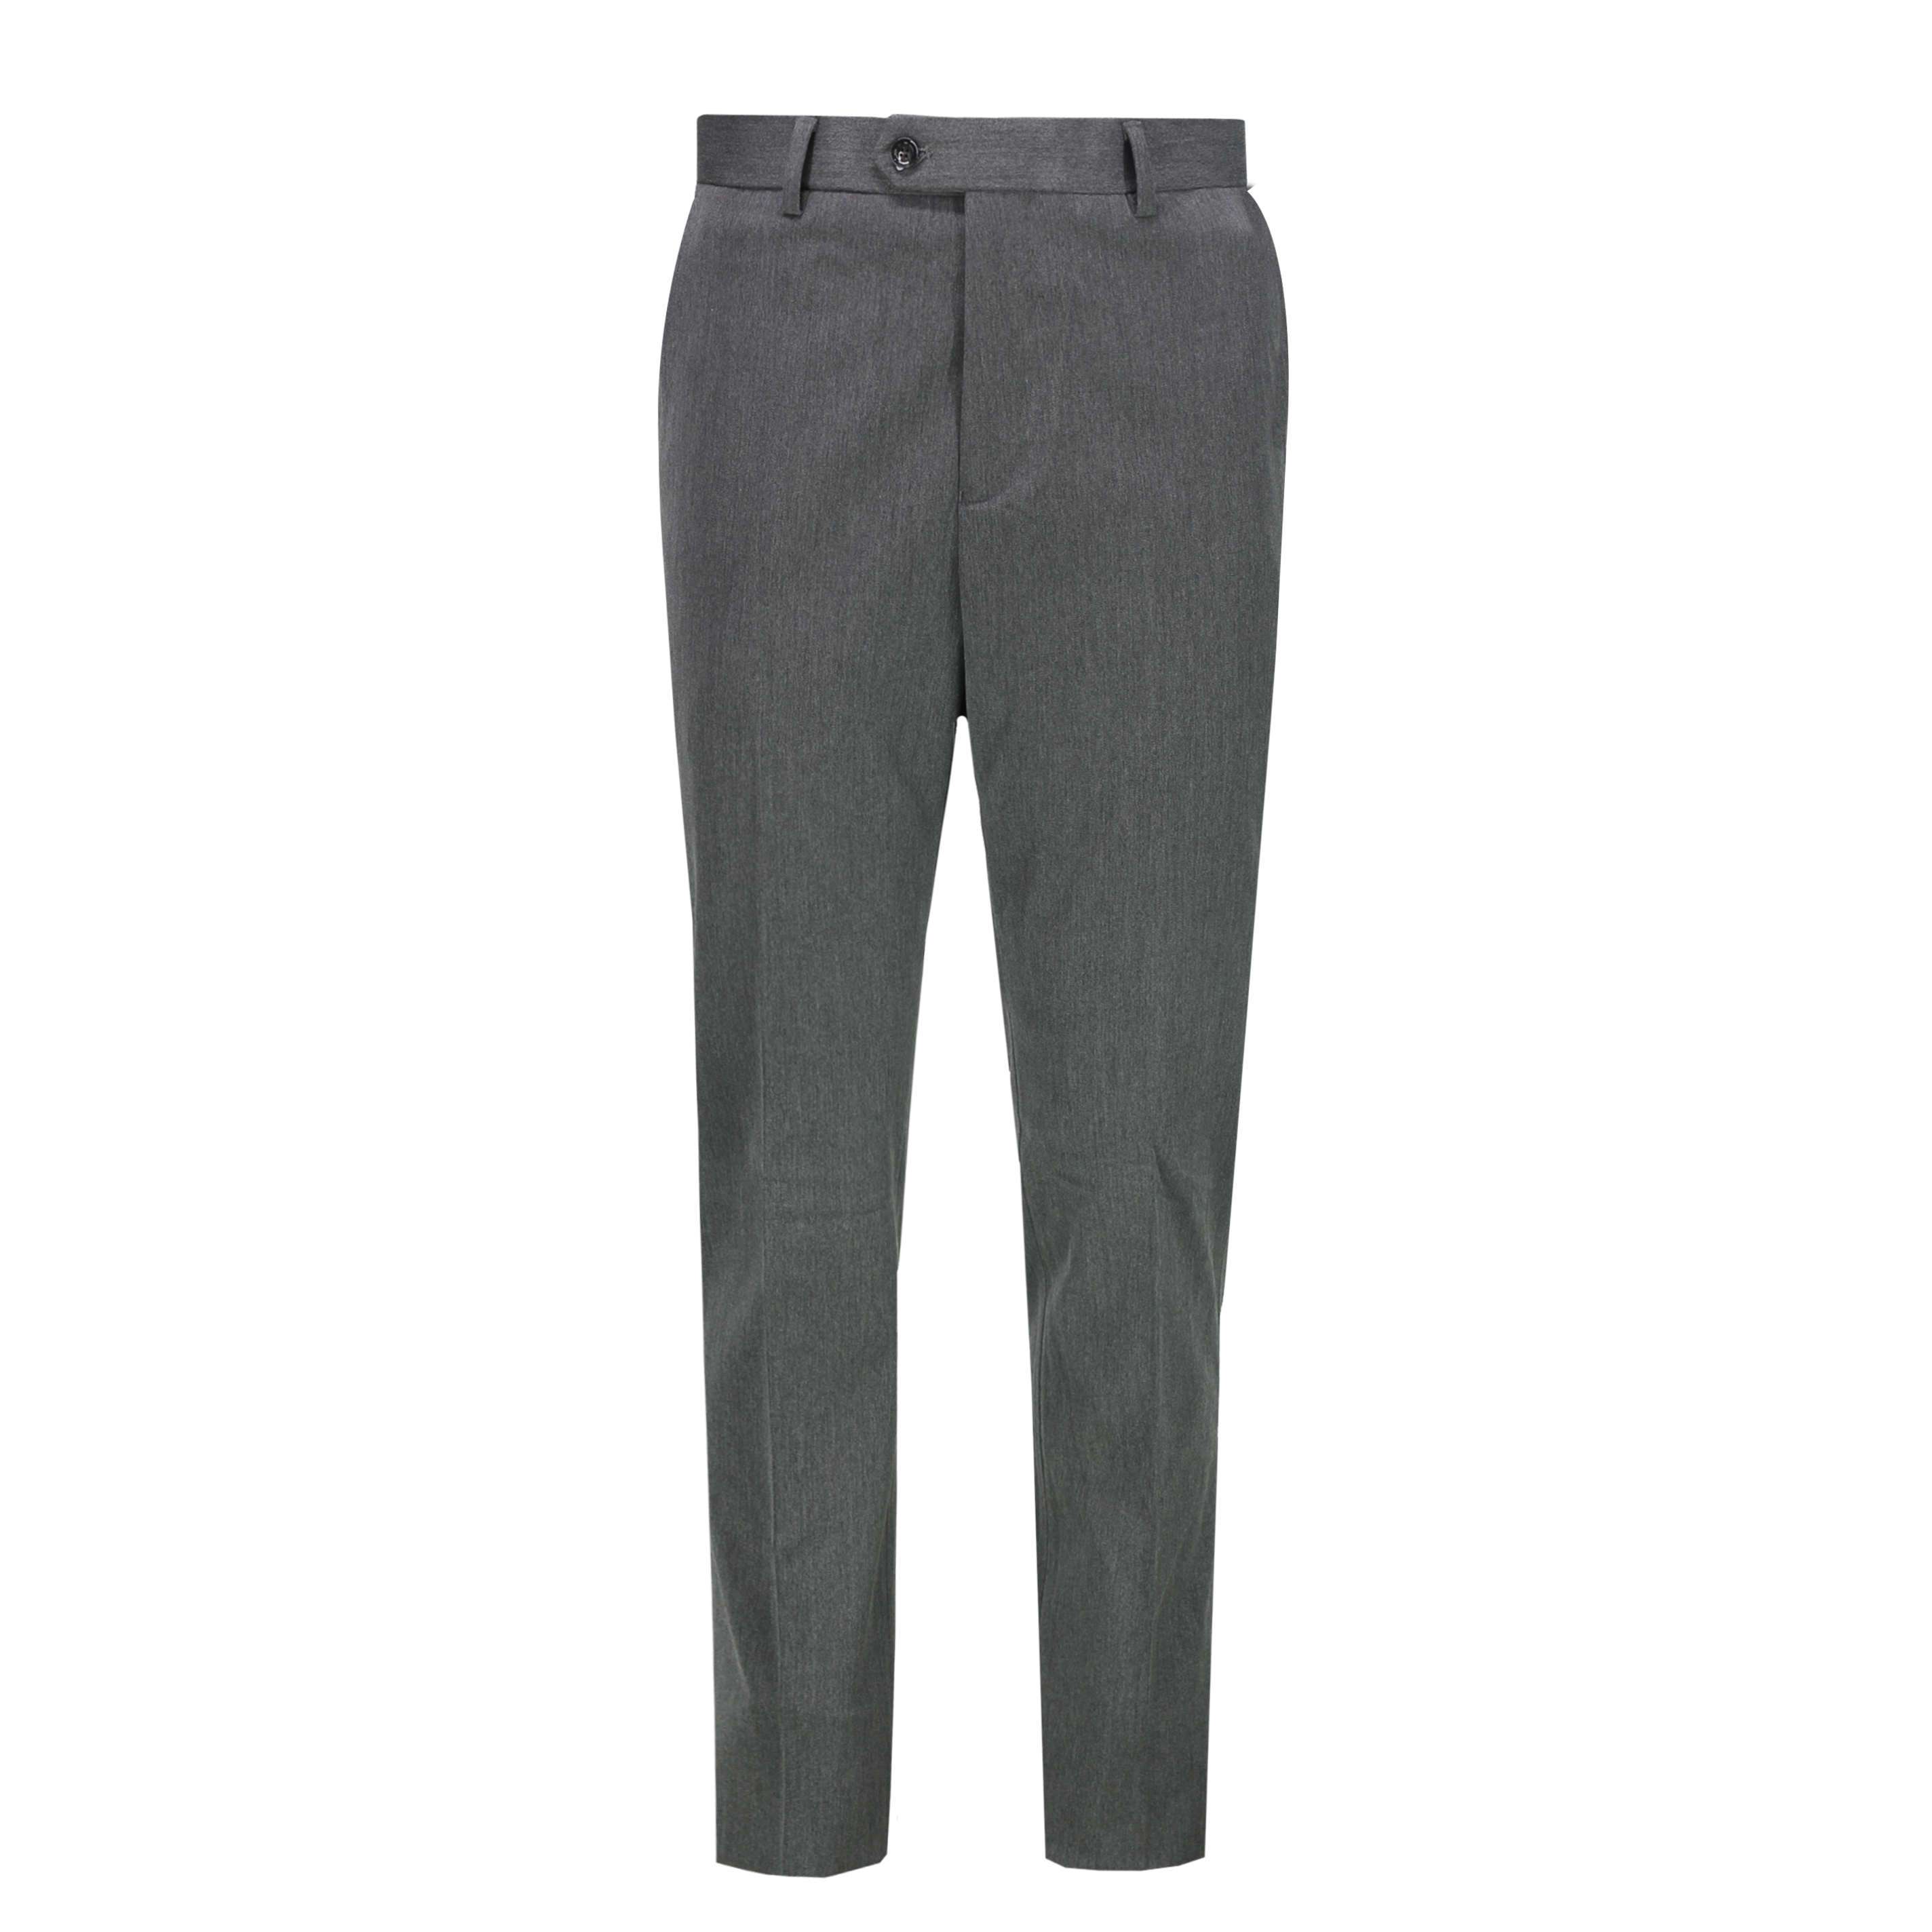 Jross - Charcoal Grey Formal Suit Trouser